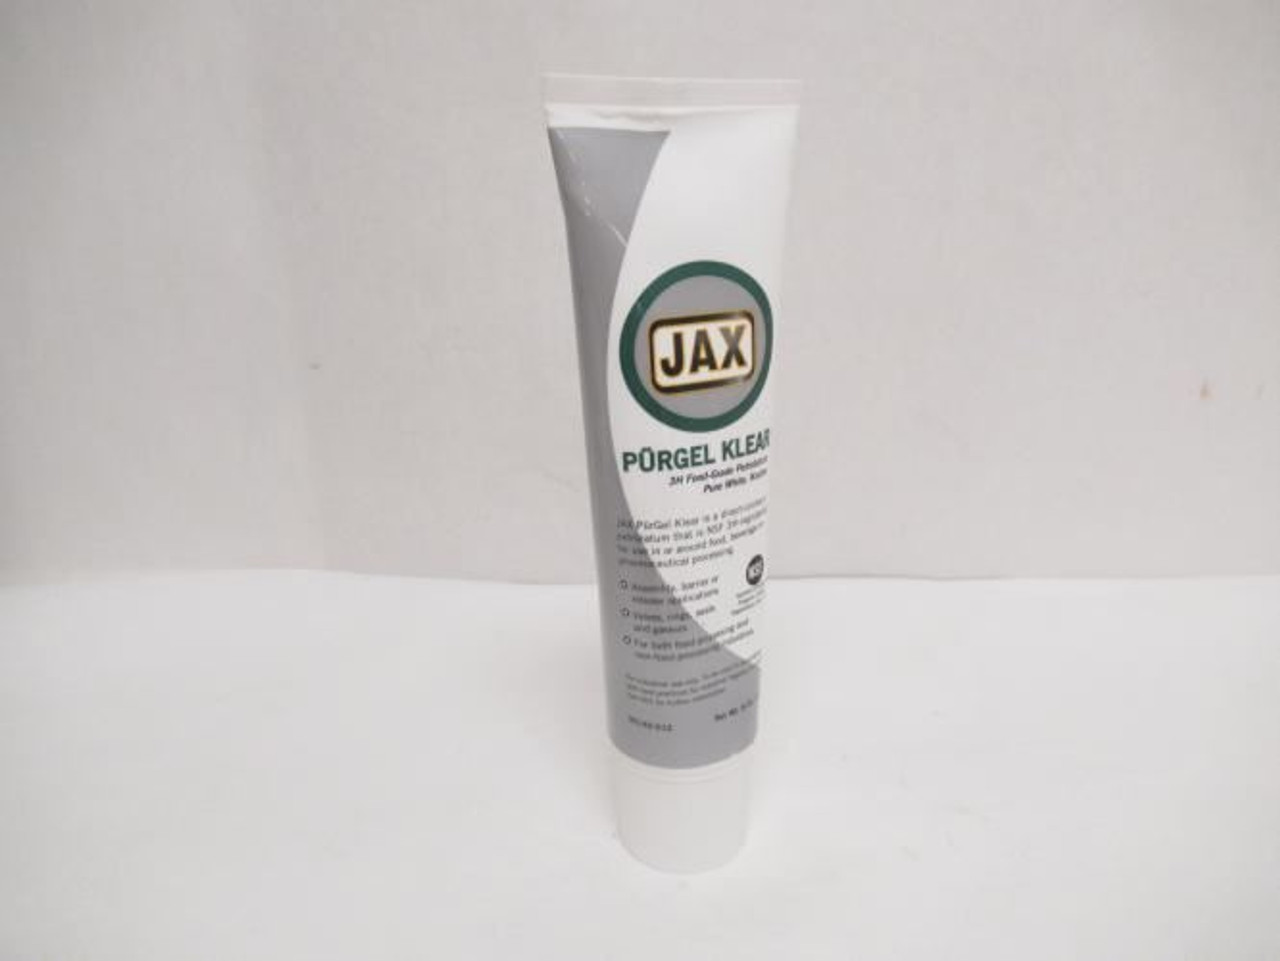 JAX 00140-012, PurGel Klear Petrolatum 3H Squeeze Tube, 8oz